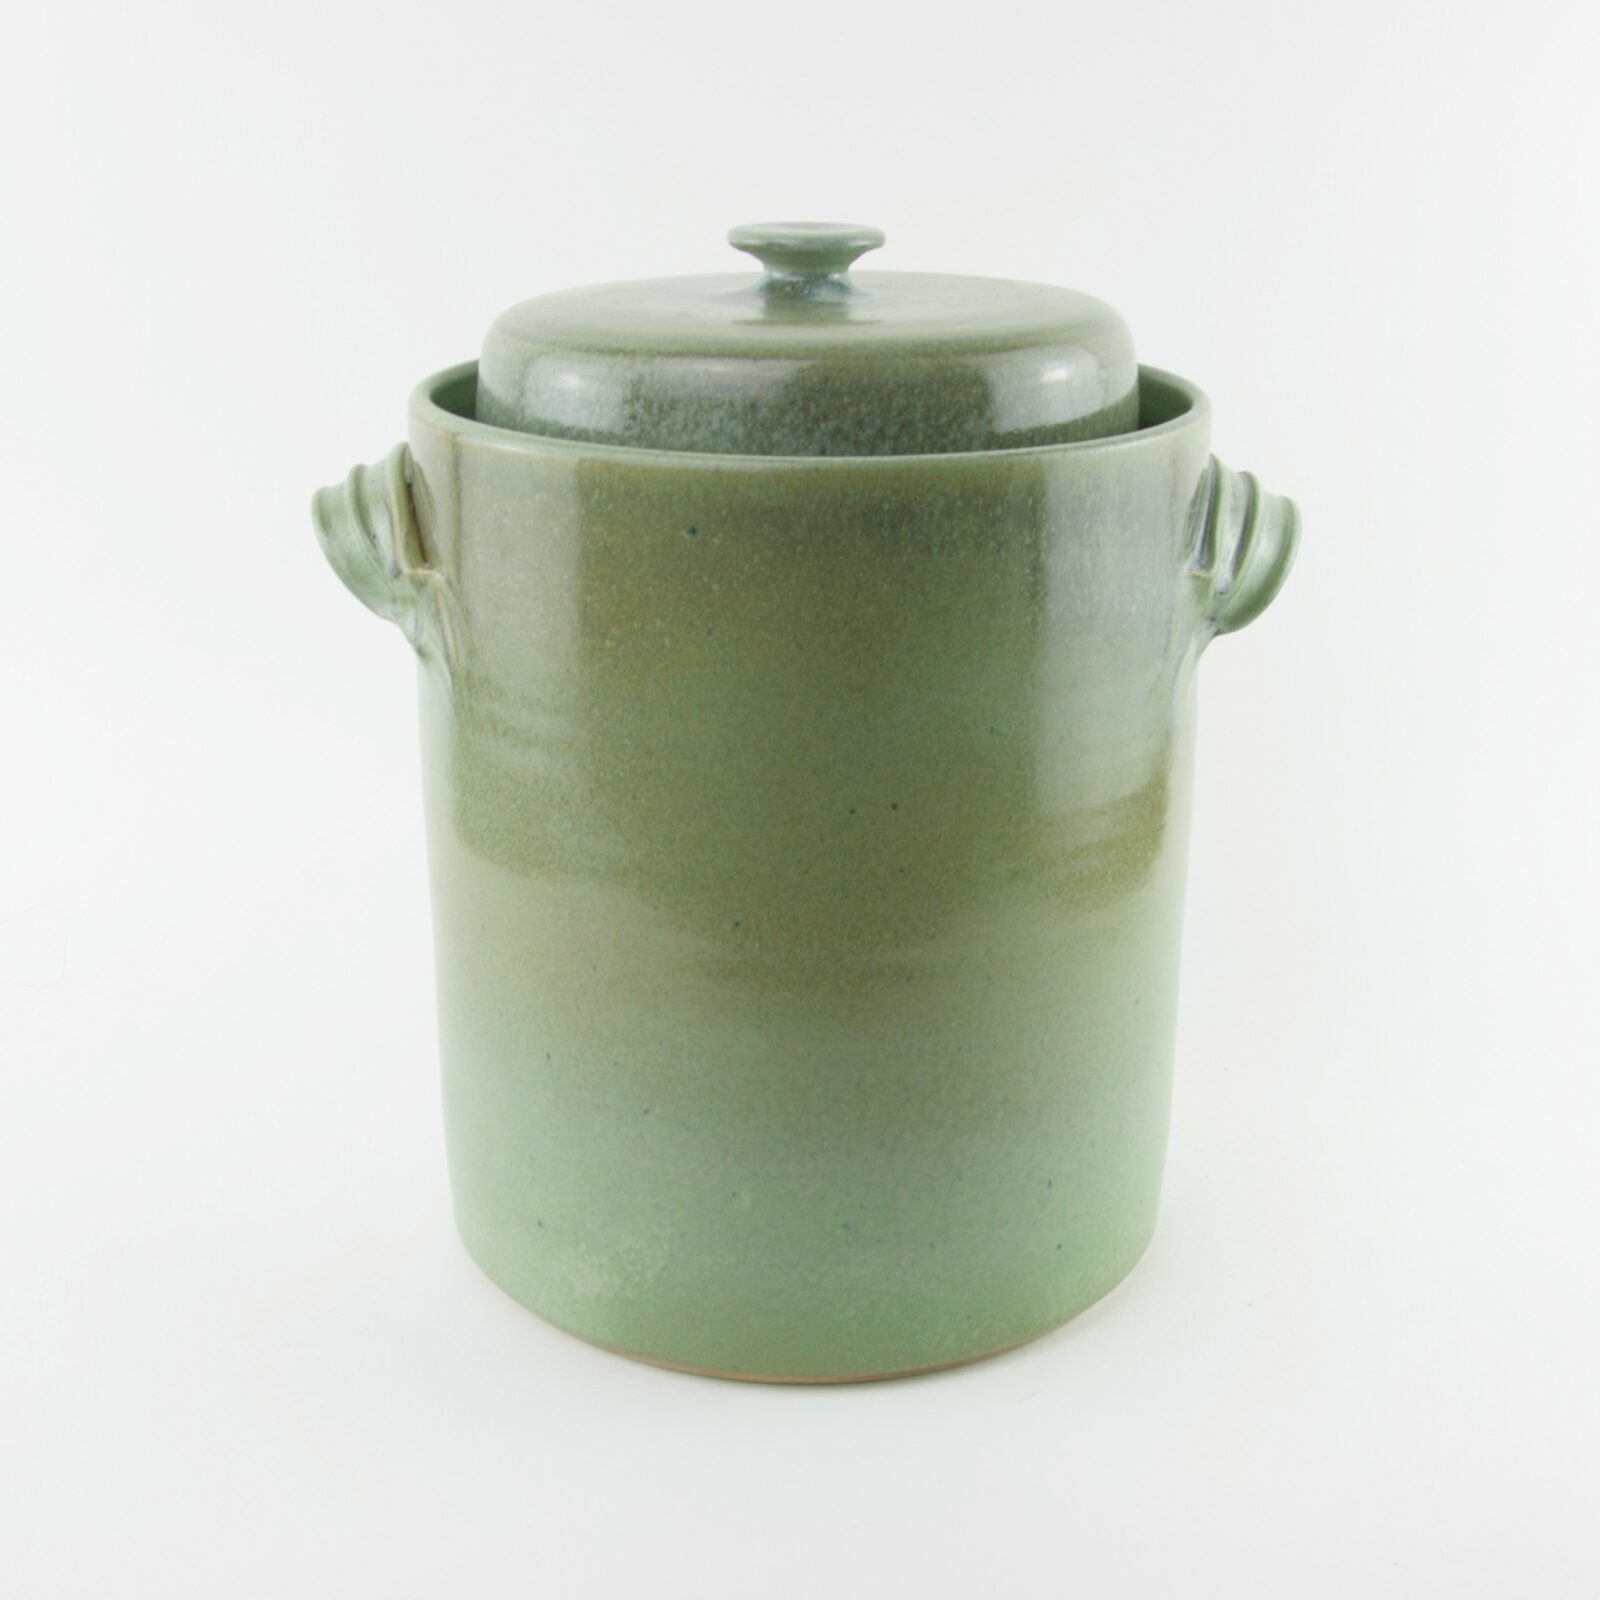 4 litre handmade ceramic sauerkraut crock in green with weight stones